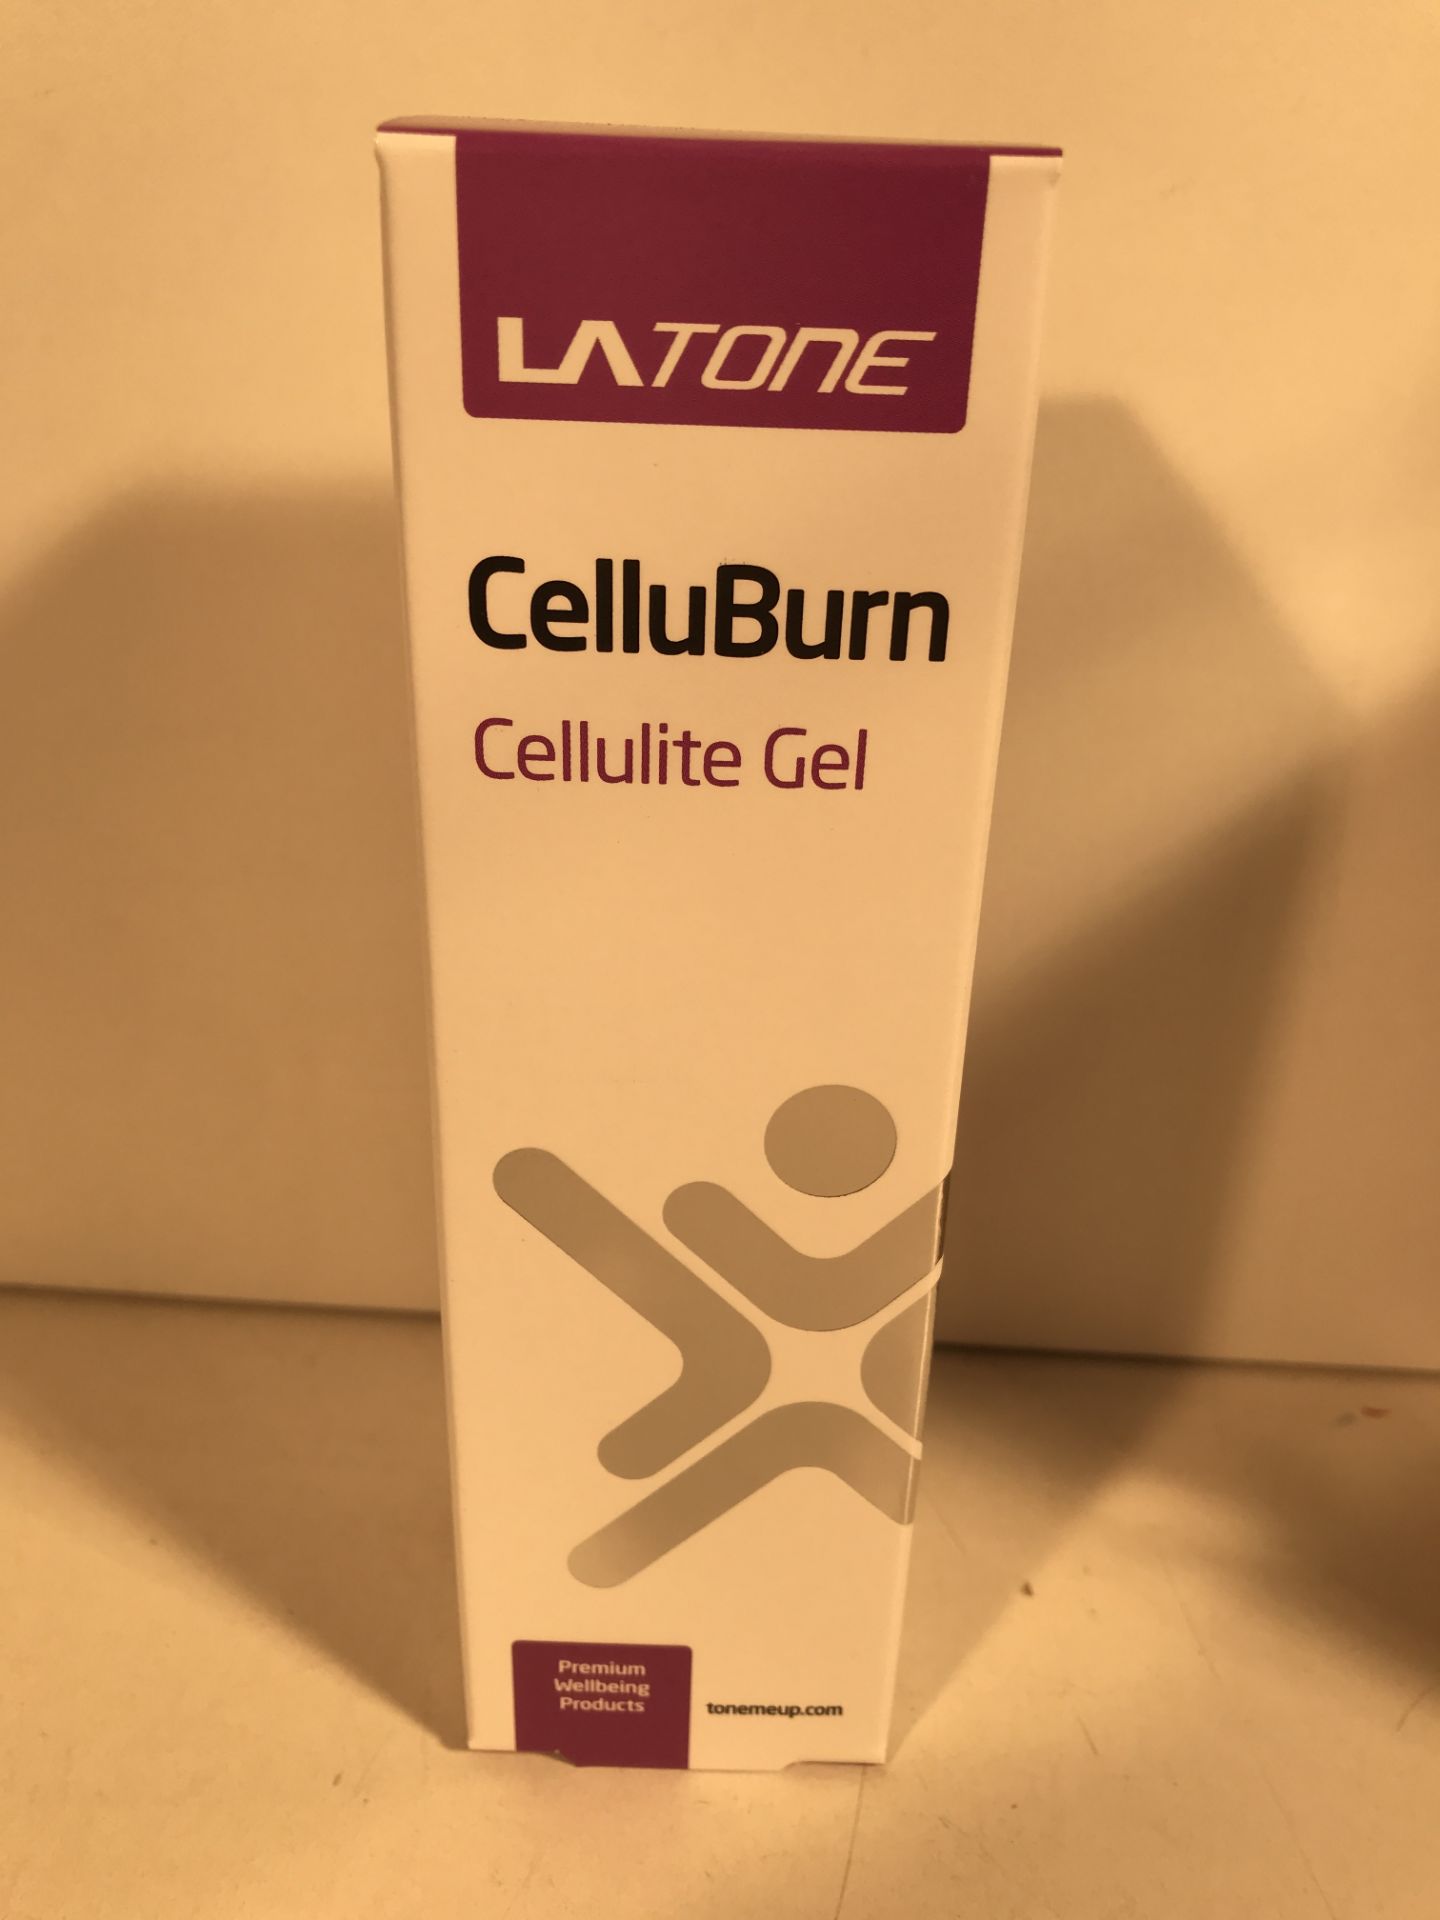 16 x LA Tone Celluburn Cellulite Gel - Image 2 of 3